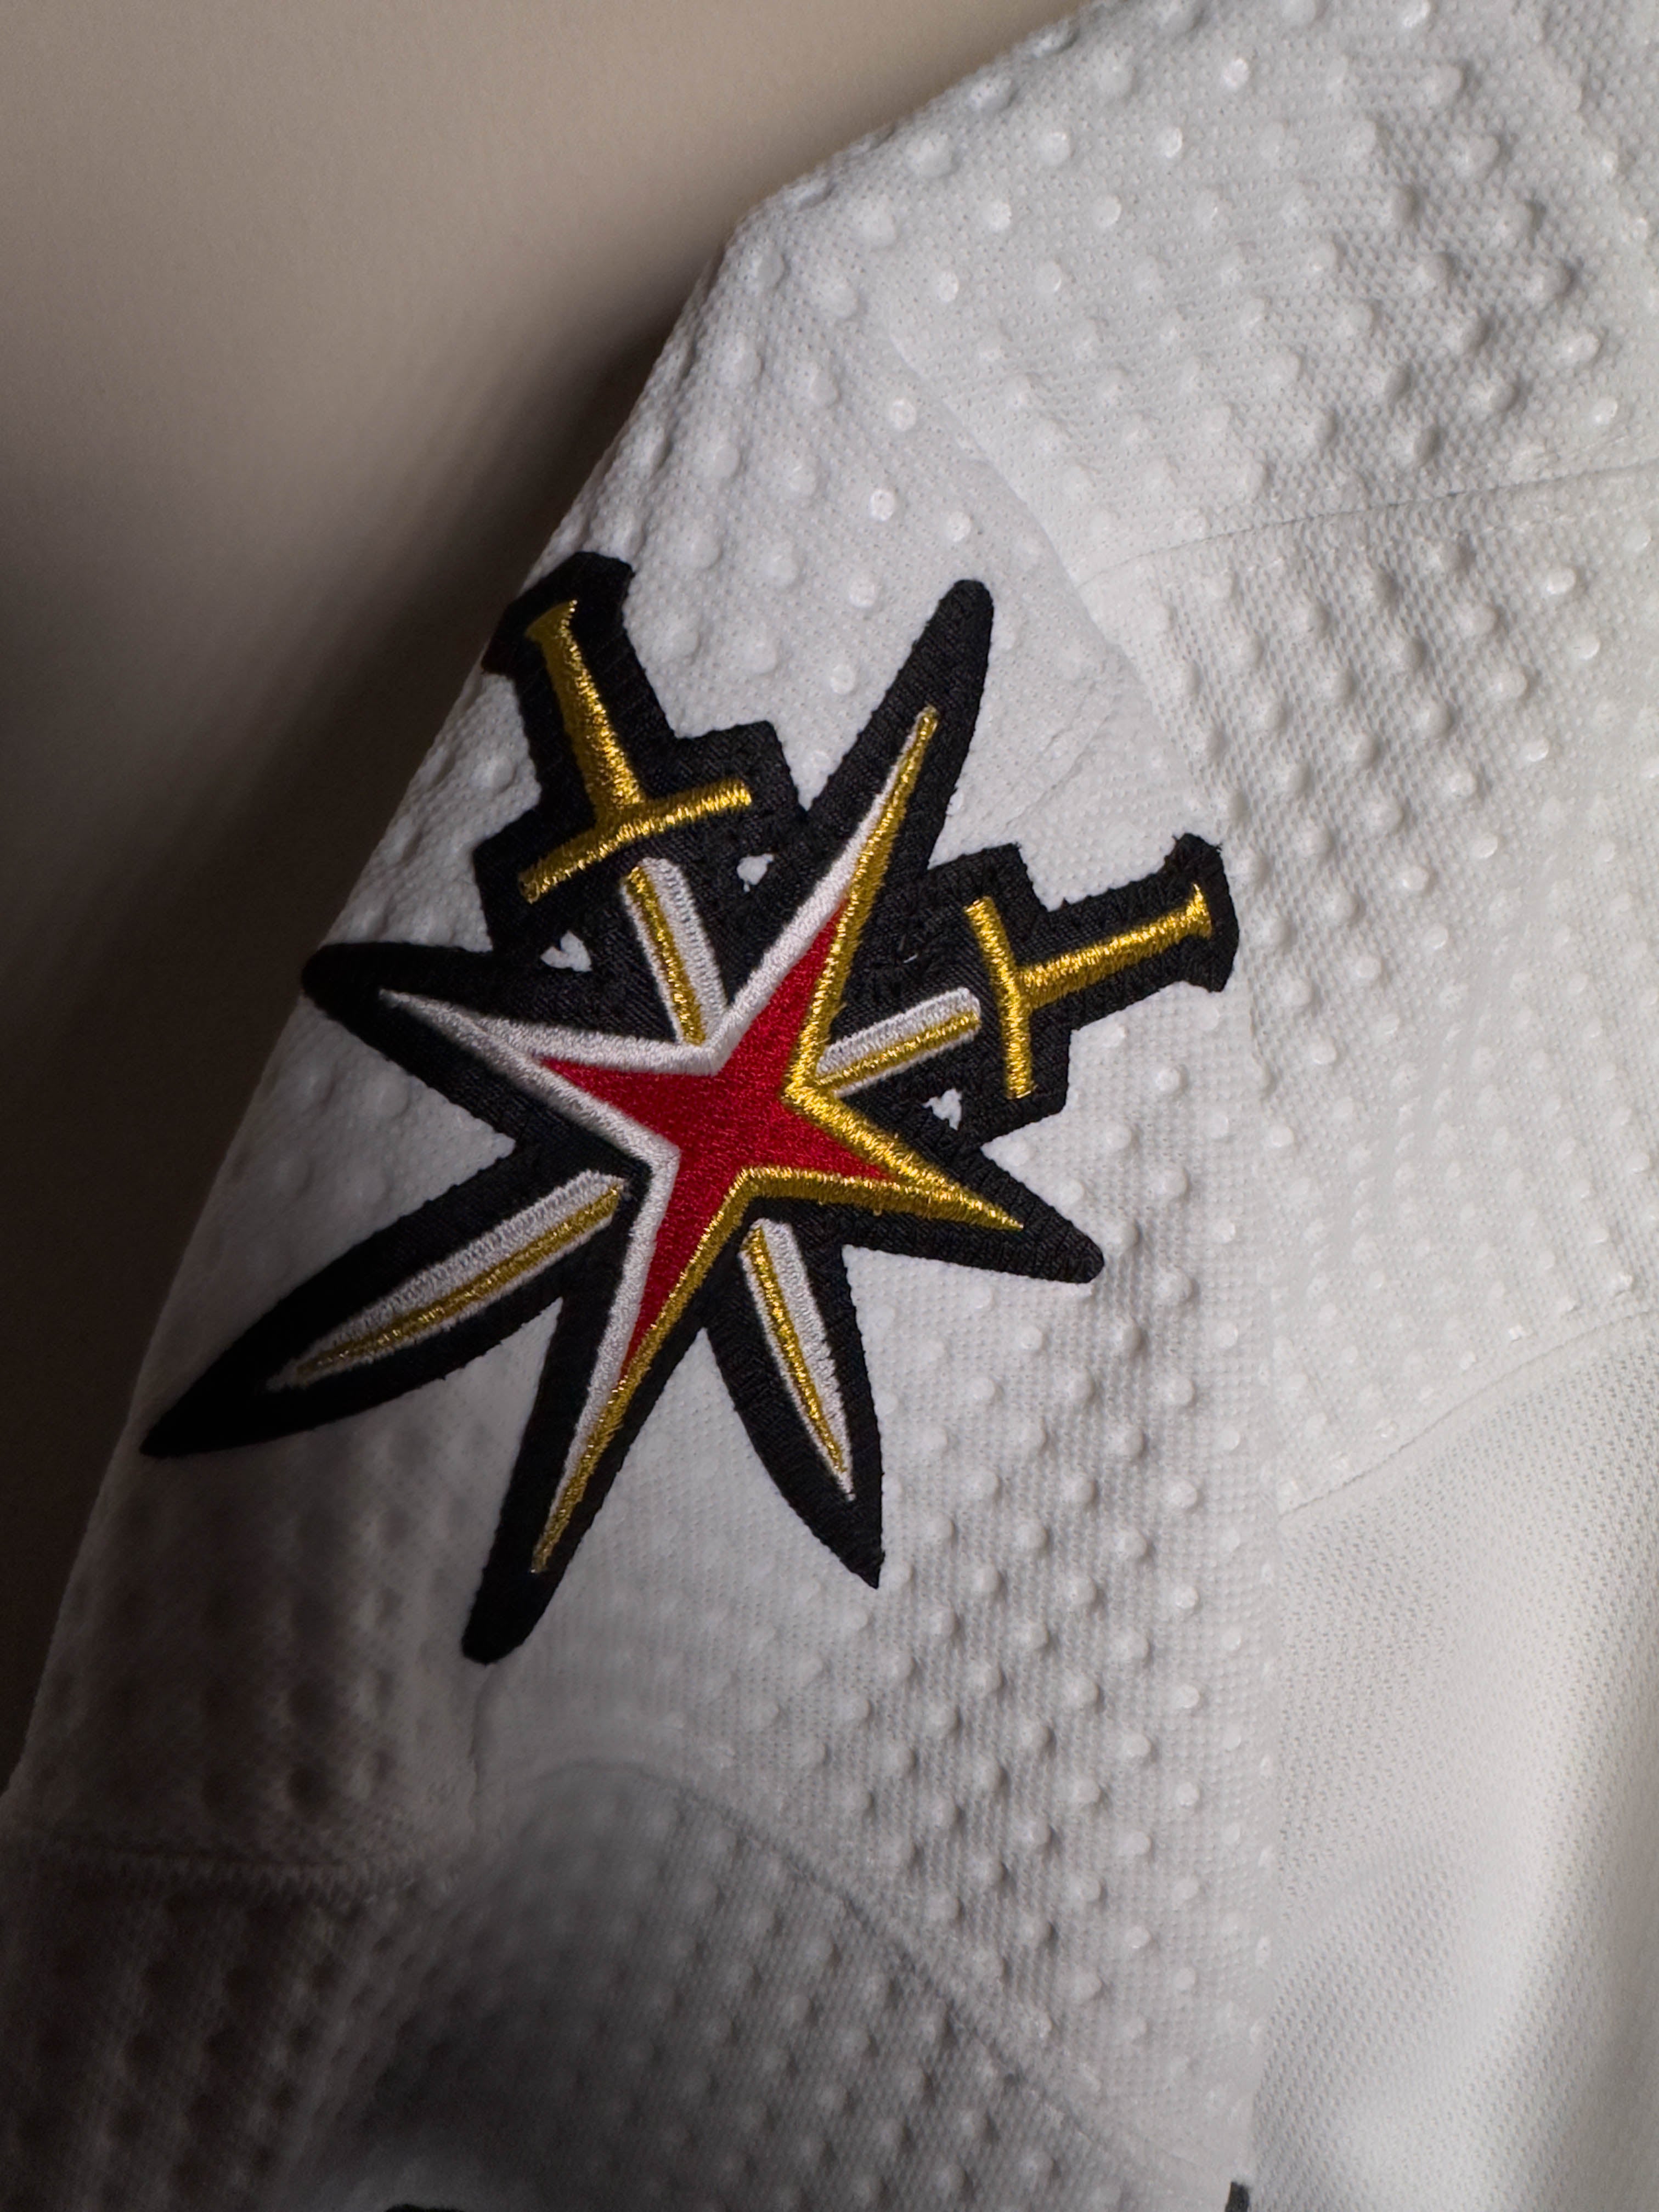 Vegas Golden Knights NHL Adidas MiC Team Issued Away Jersey Size 60G (Goalie Cut)